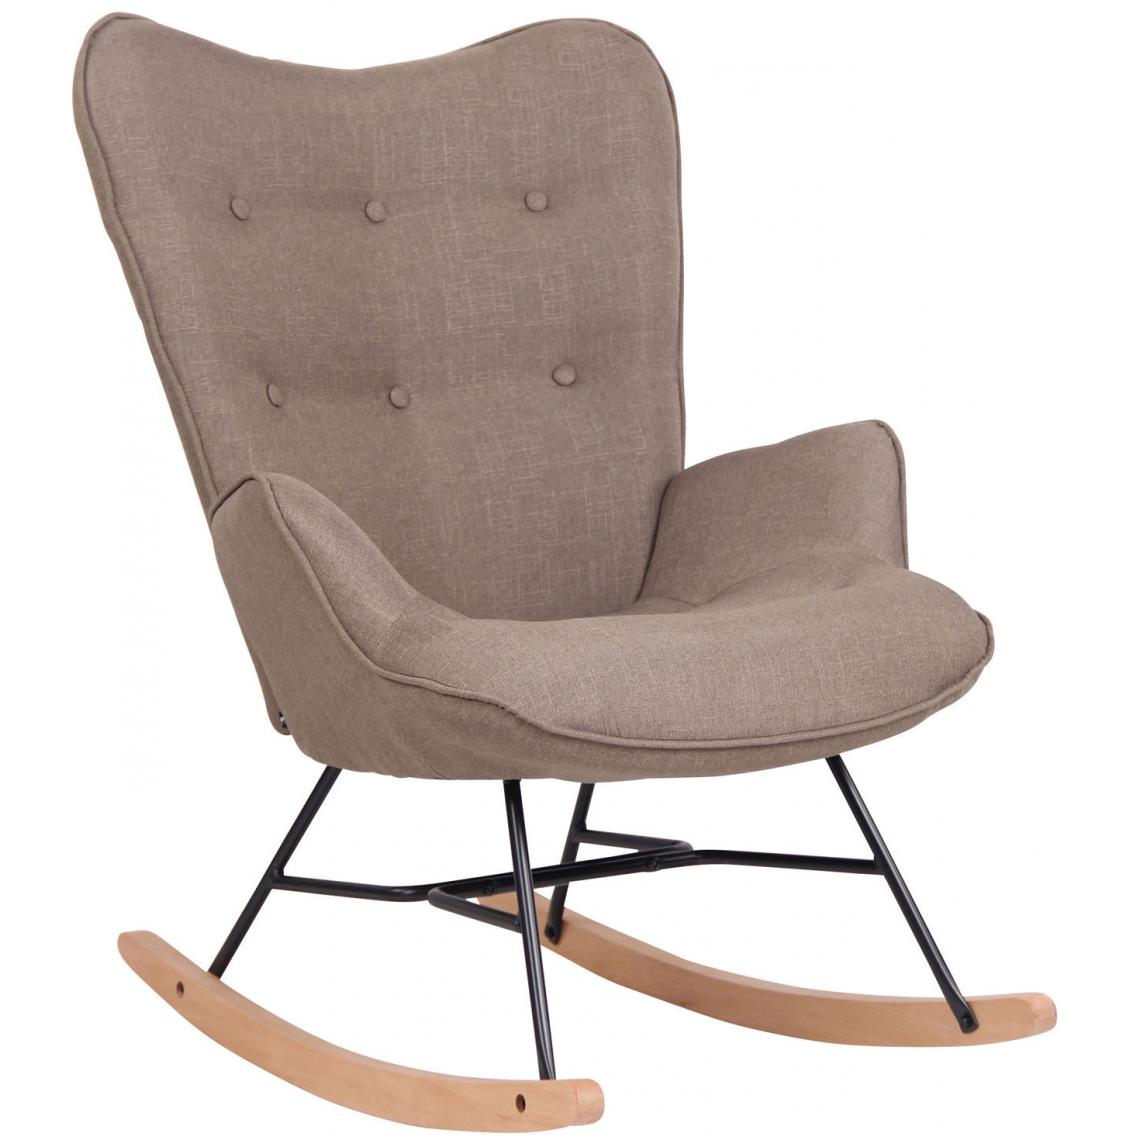 Icaverne - Stylé Chaise en tissu selection Addis-Abeba couleur taupe - Chaises